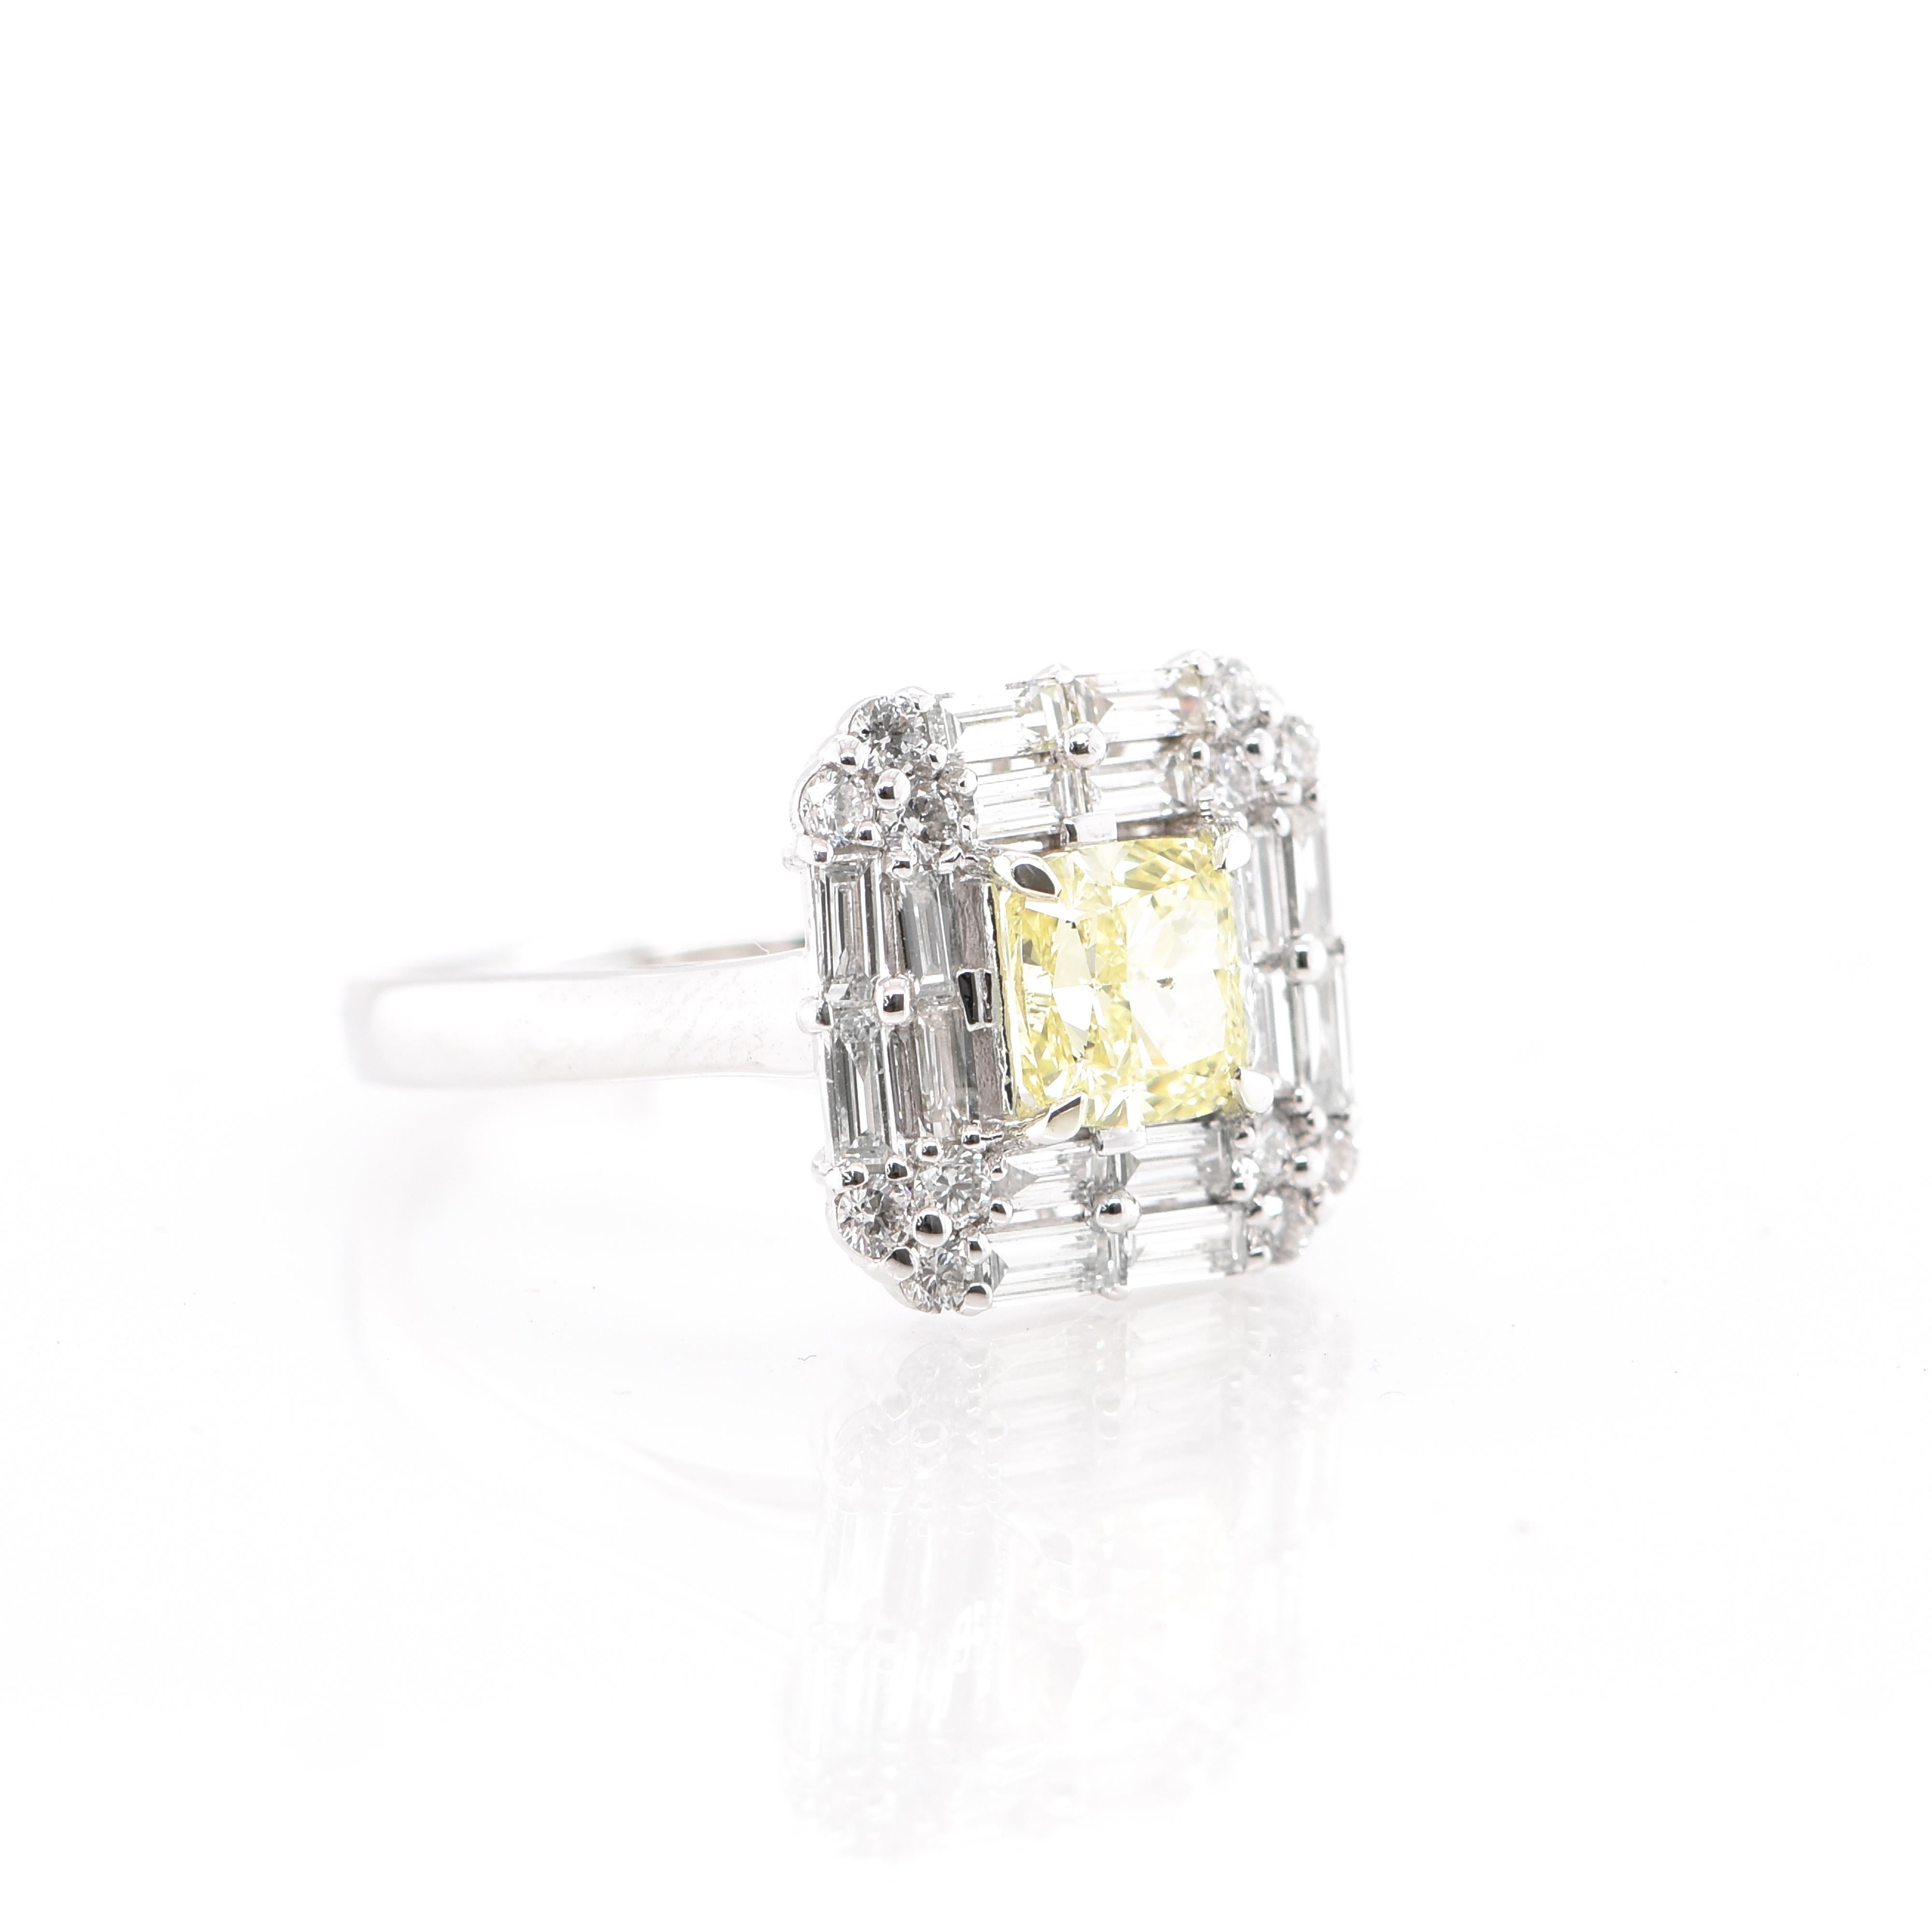 Art Deco 1.20 Carat, SI-1, Light Yellow Diamond Ring set in Platinum